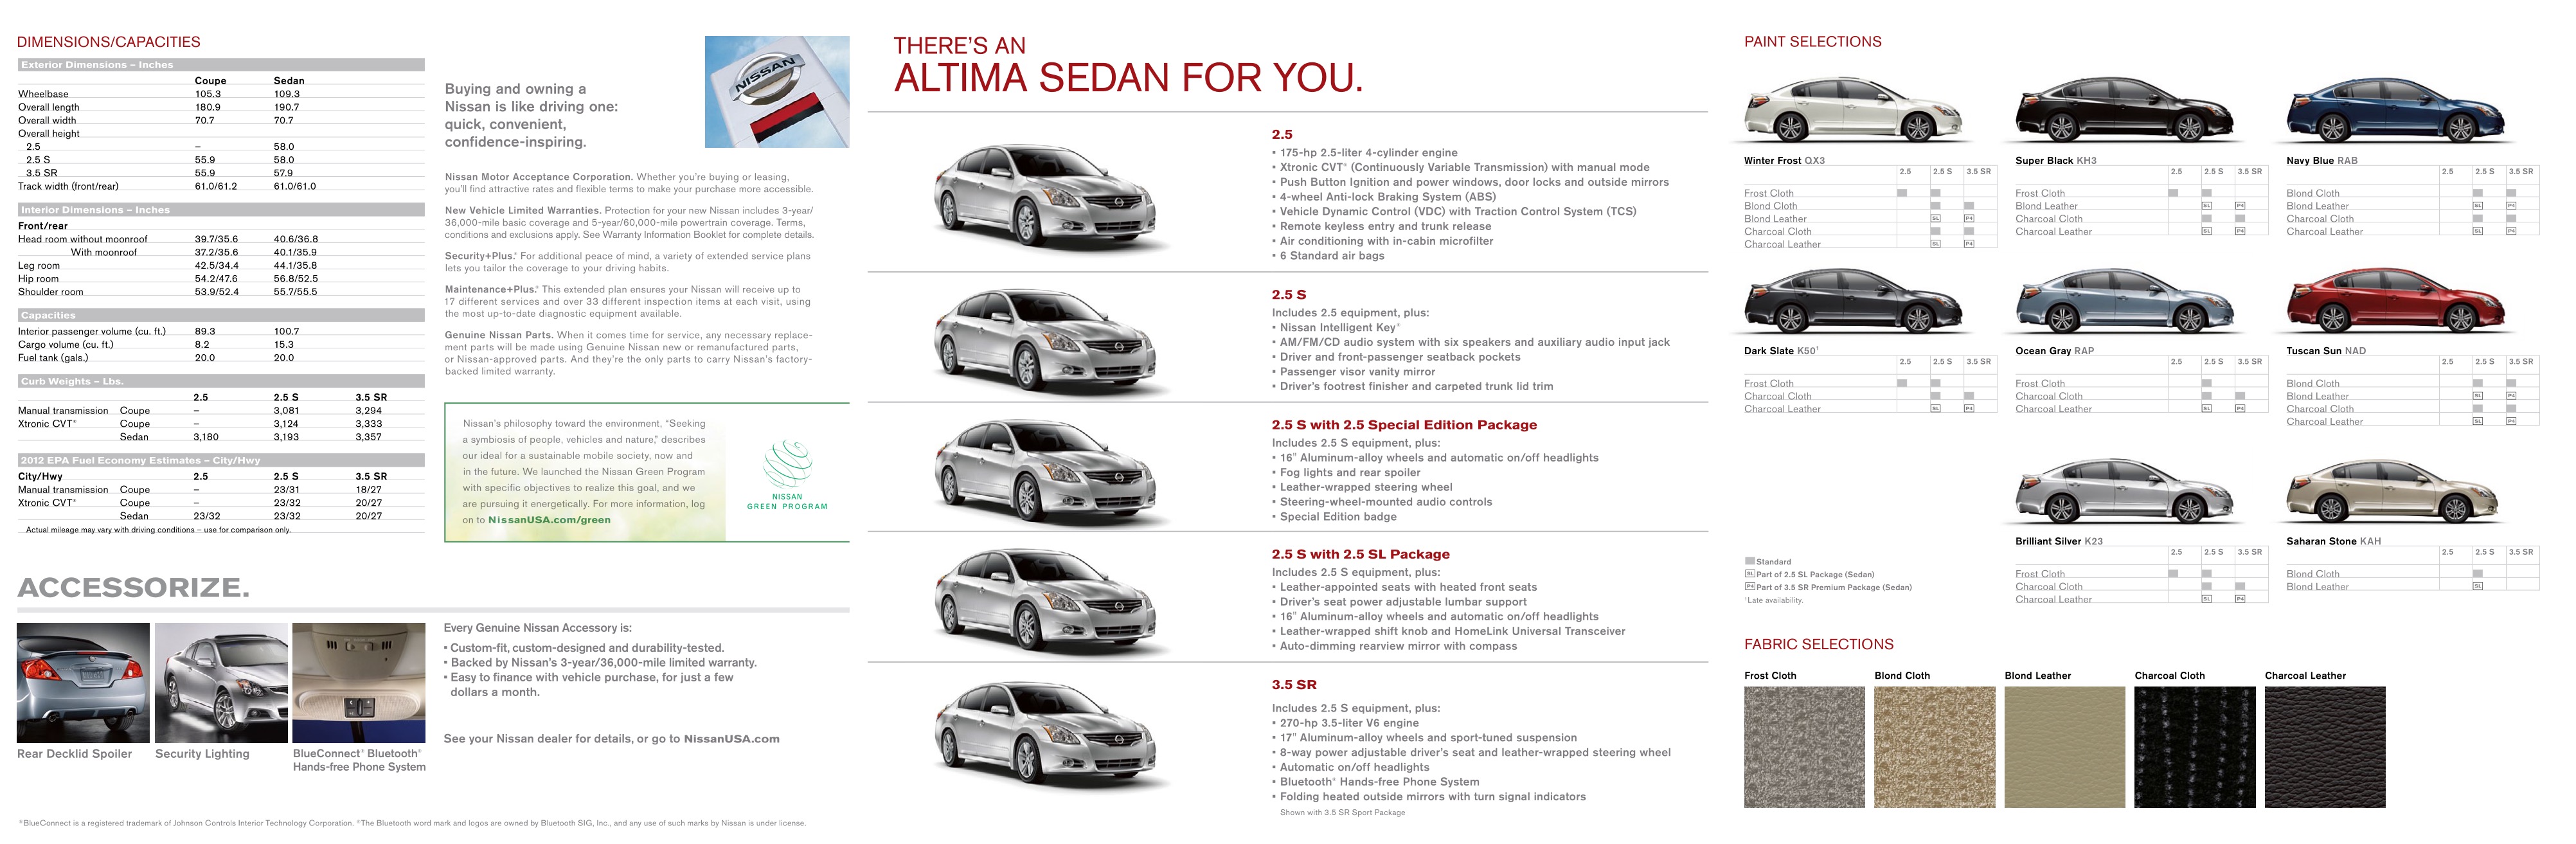 2012 Nissan Altima Brochure Page 6